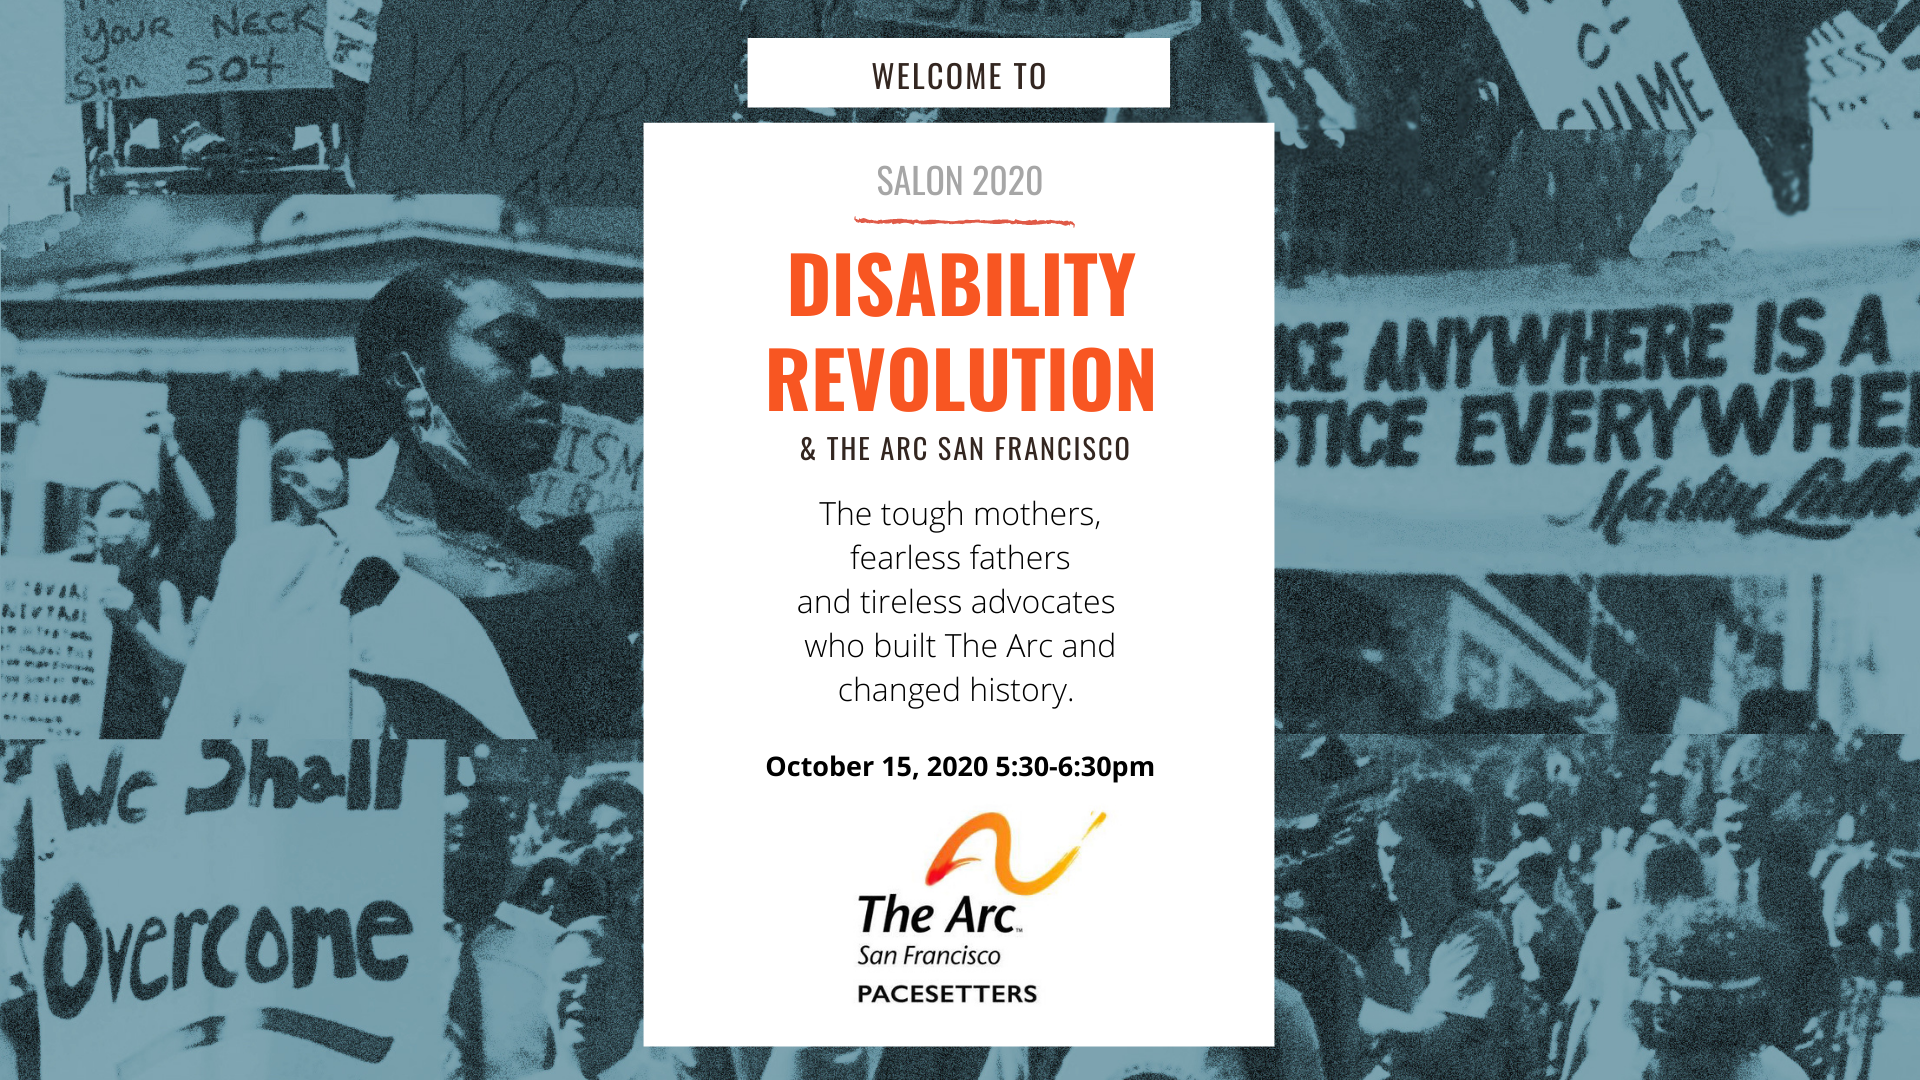 The Disability Revolution & The Arc San Francisco